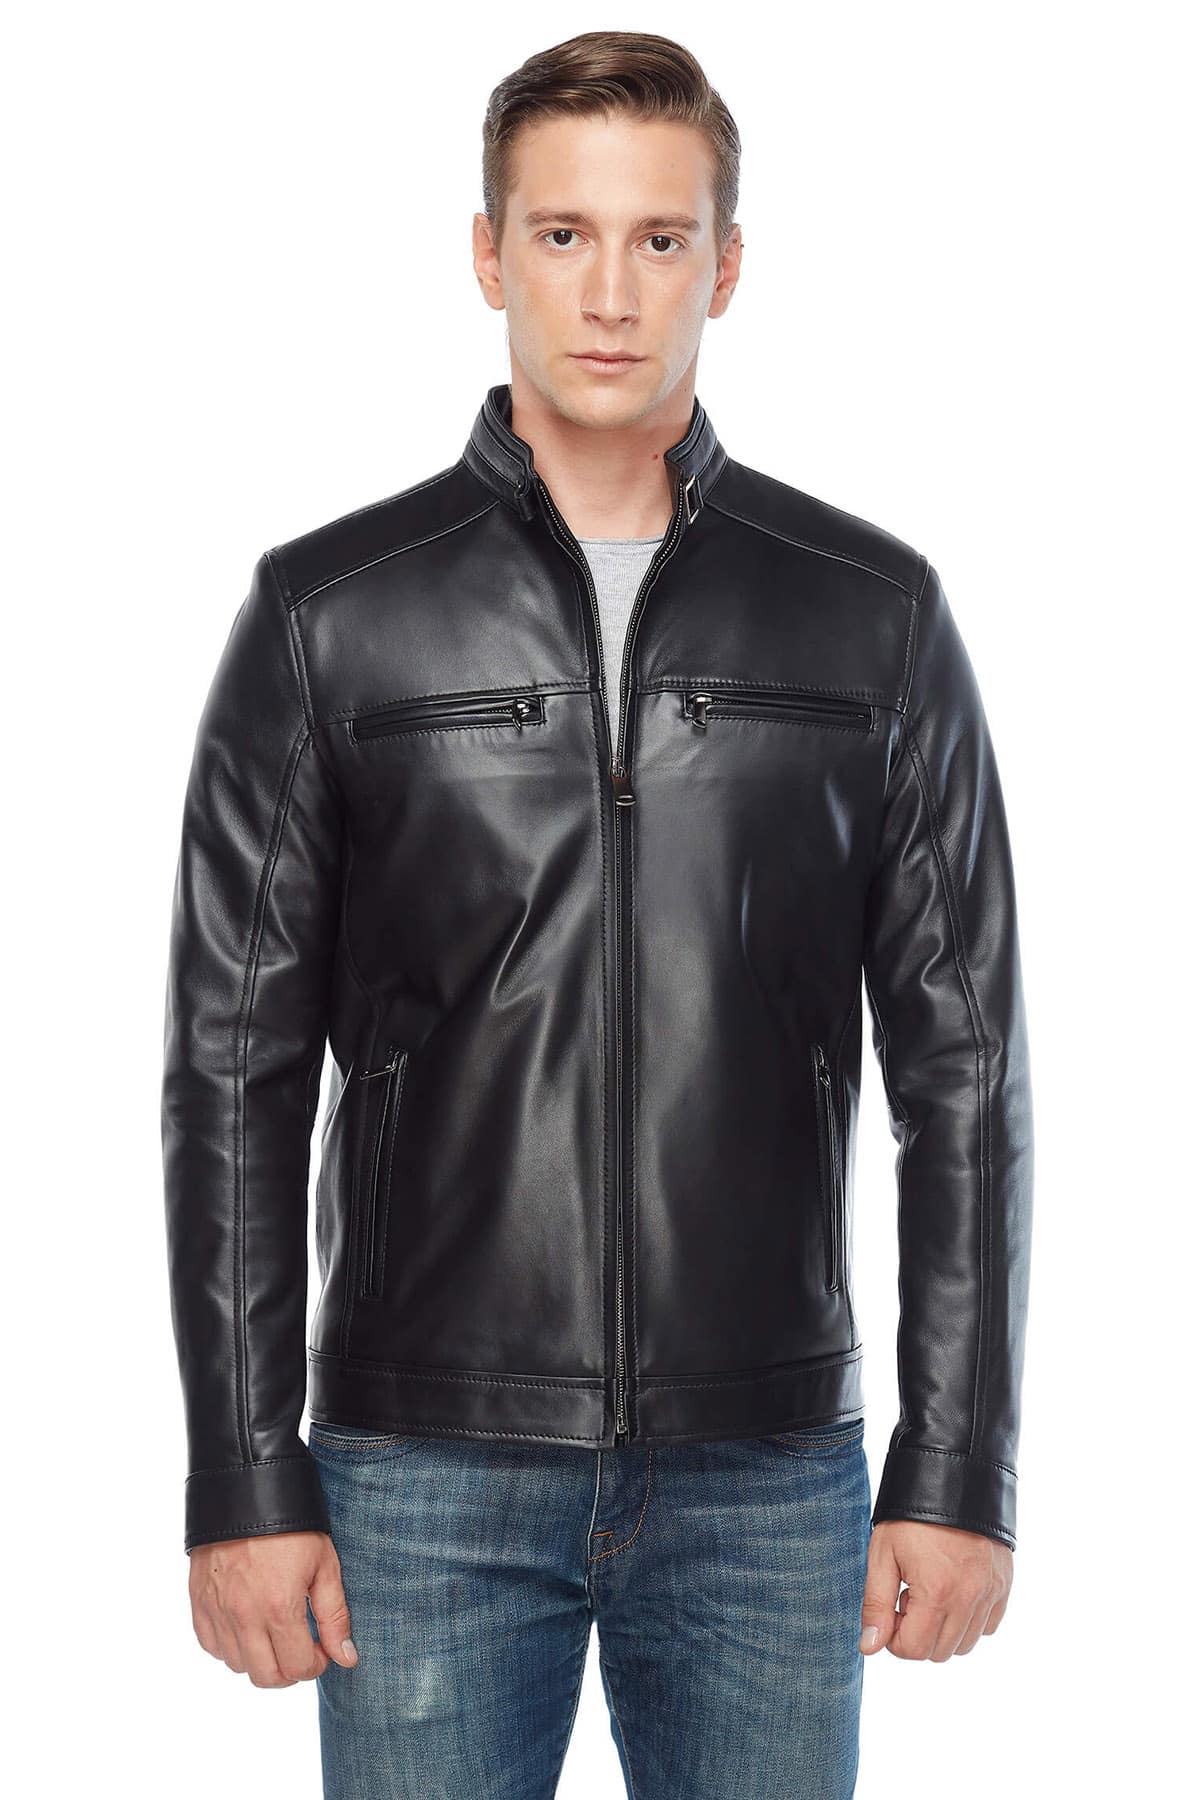 Craig McGinlay Men's 100 % Real Black Leather Jacket